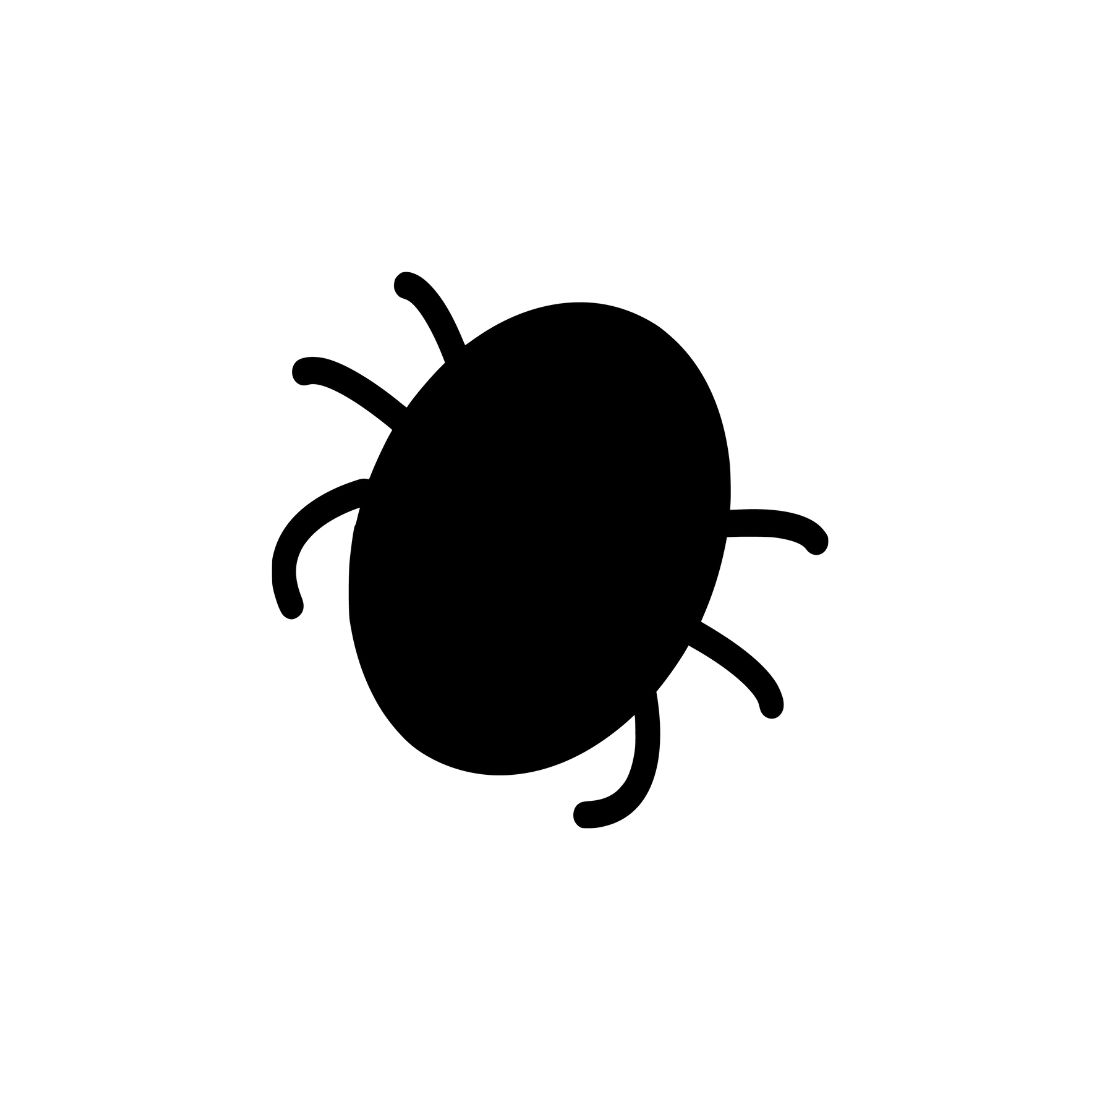 Ladybug Silhouette Bundle Preview image.